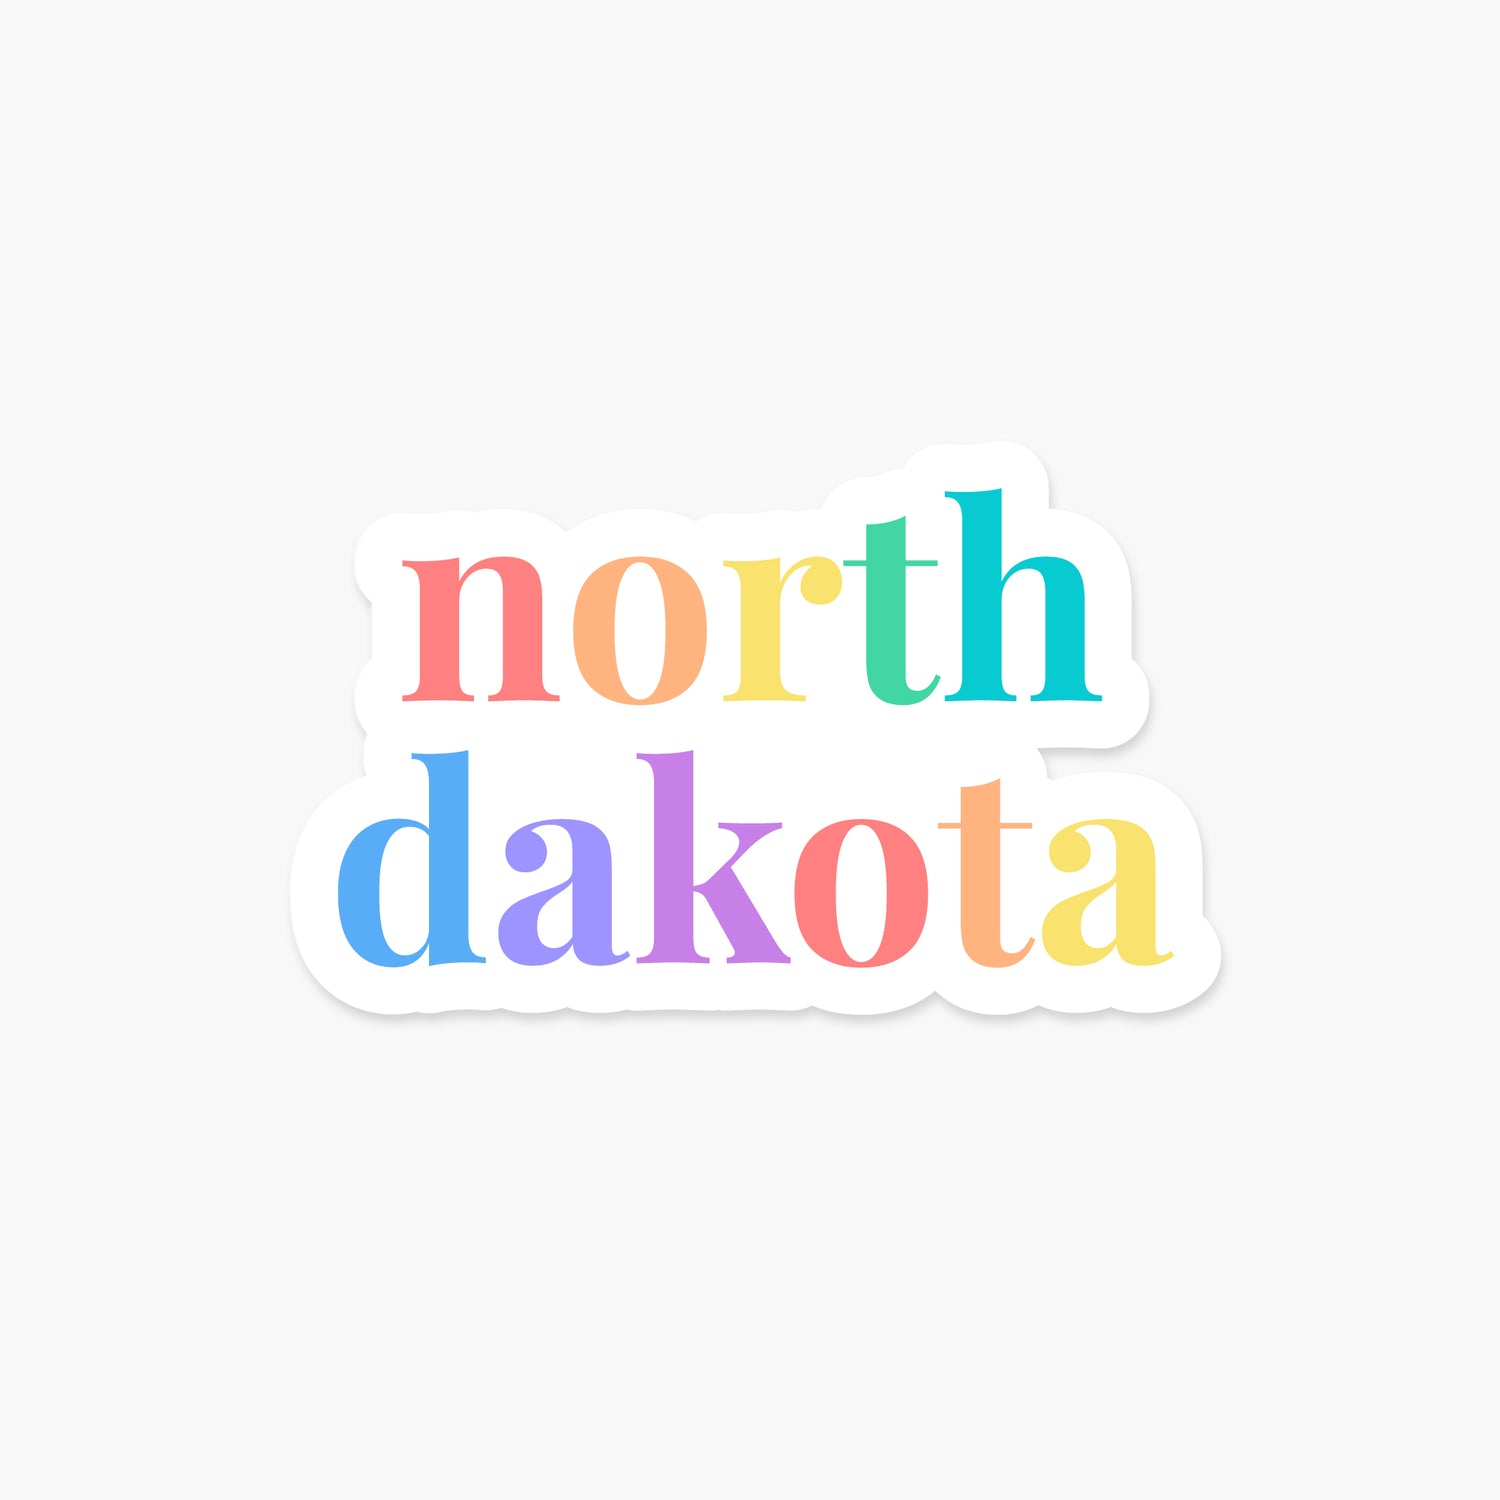 North Dakota US State - Everyday Sticker | Footnotes Paper